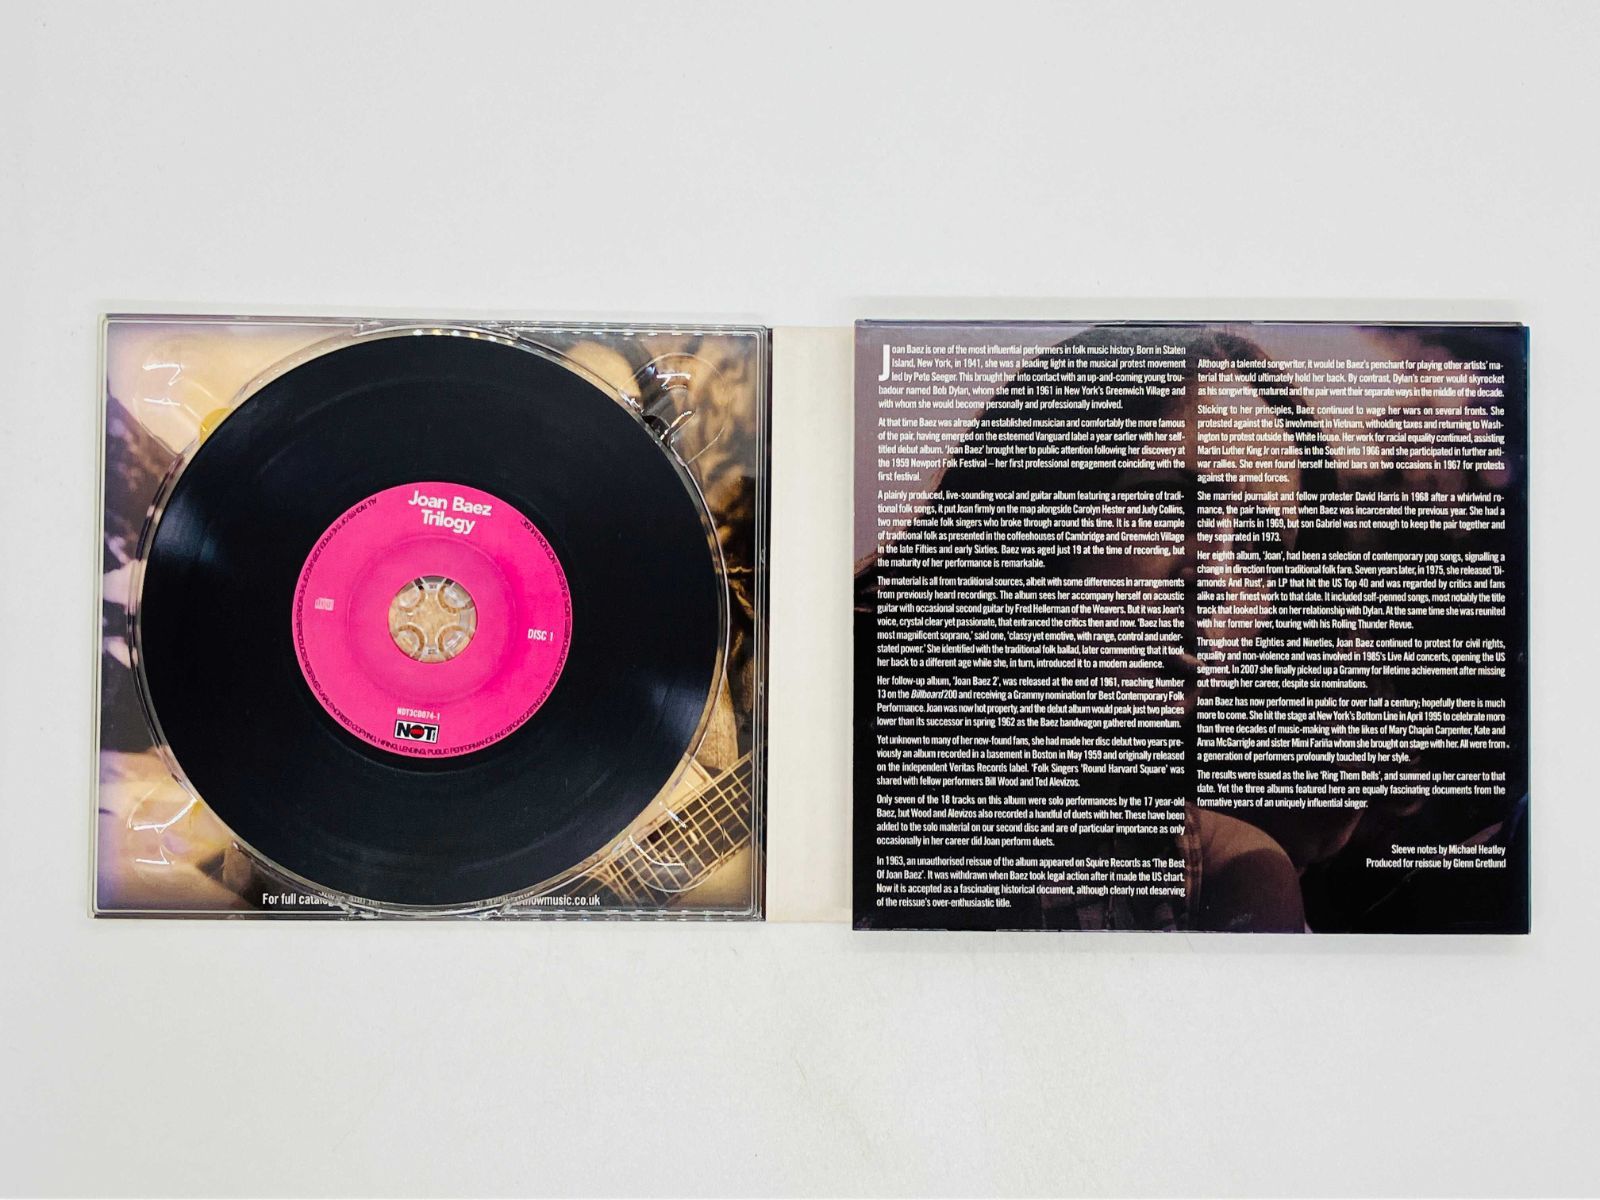 3CD ジョーン・バエズ / フォークソング・クィーン ベスト・アルバム Joan Baez / Trilogy 帯付き Y12